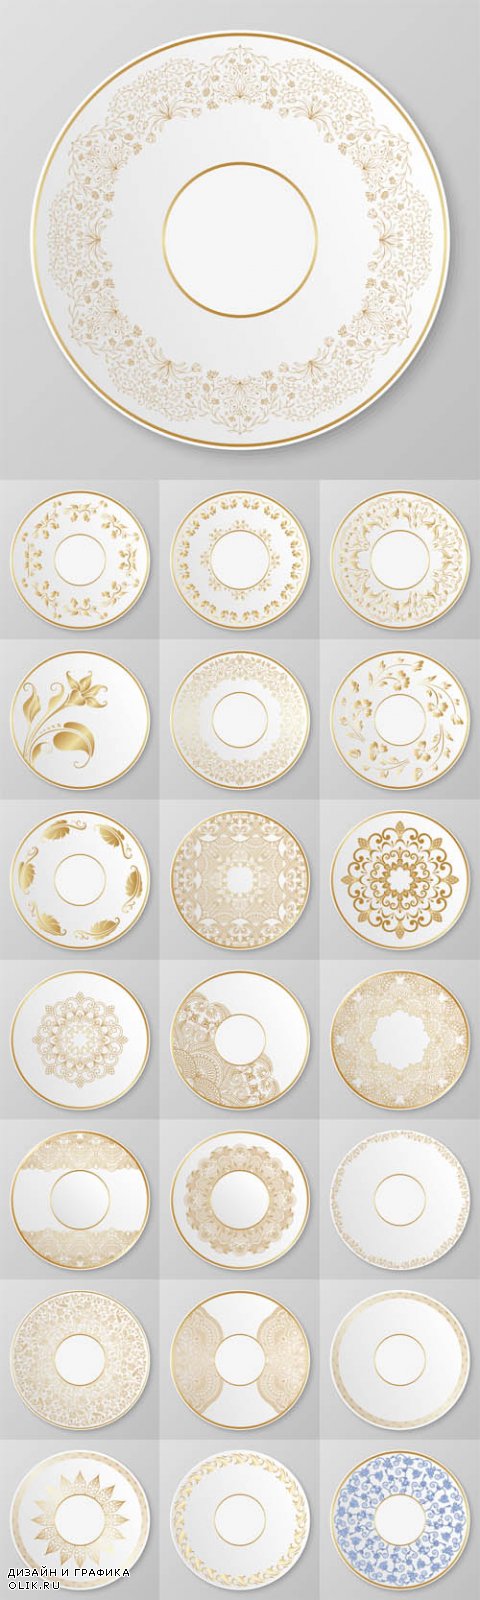 Vector Gold Decorative Plates